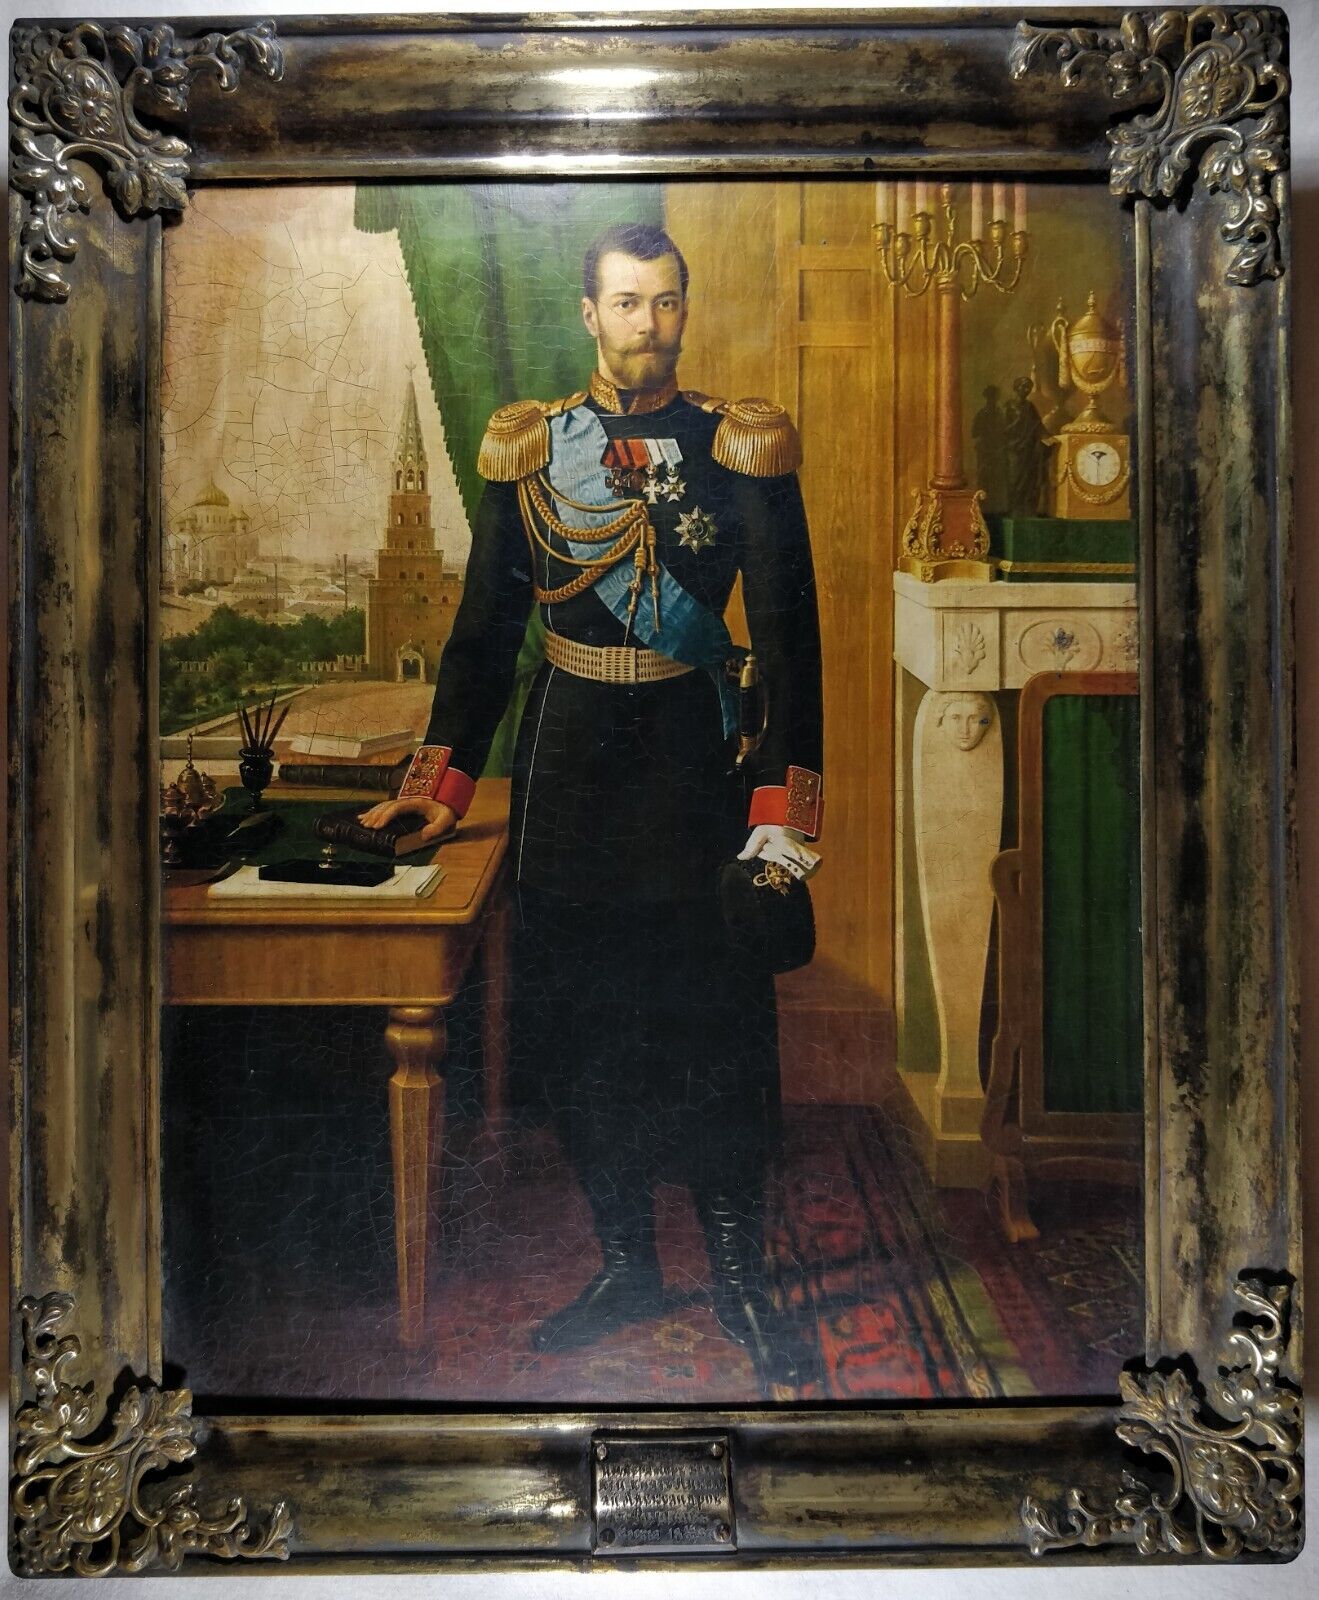 RUSSIAN Emperor CZAR NICHOLAS 2 Romanov. Император Николай 2 Романов.